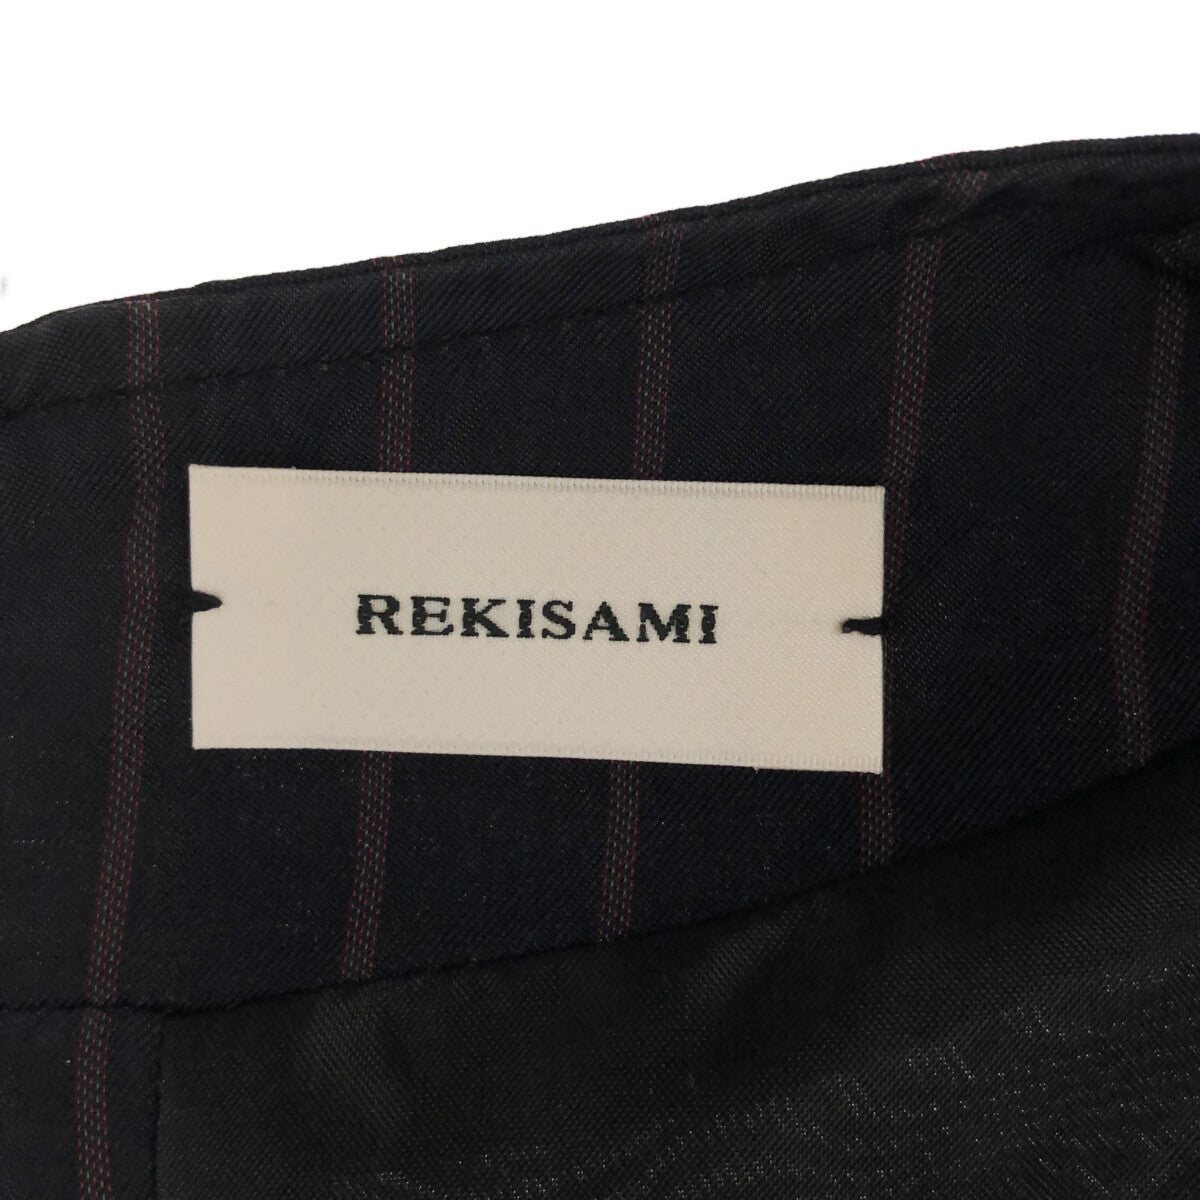 REKISAMI / レキサミ | キュプラ ストライプ 切替 Vネックワンピース | 2 | ブラック / ネイビー | レディース